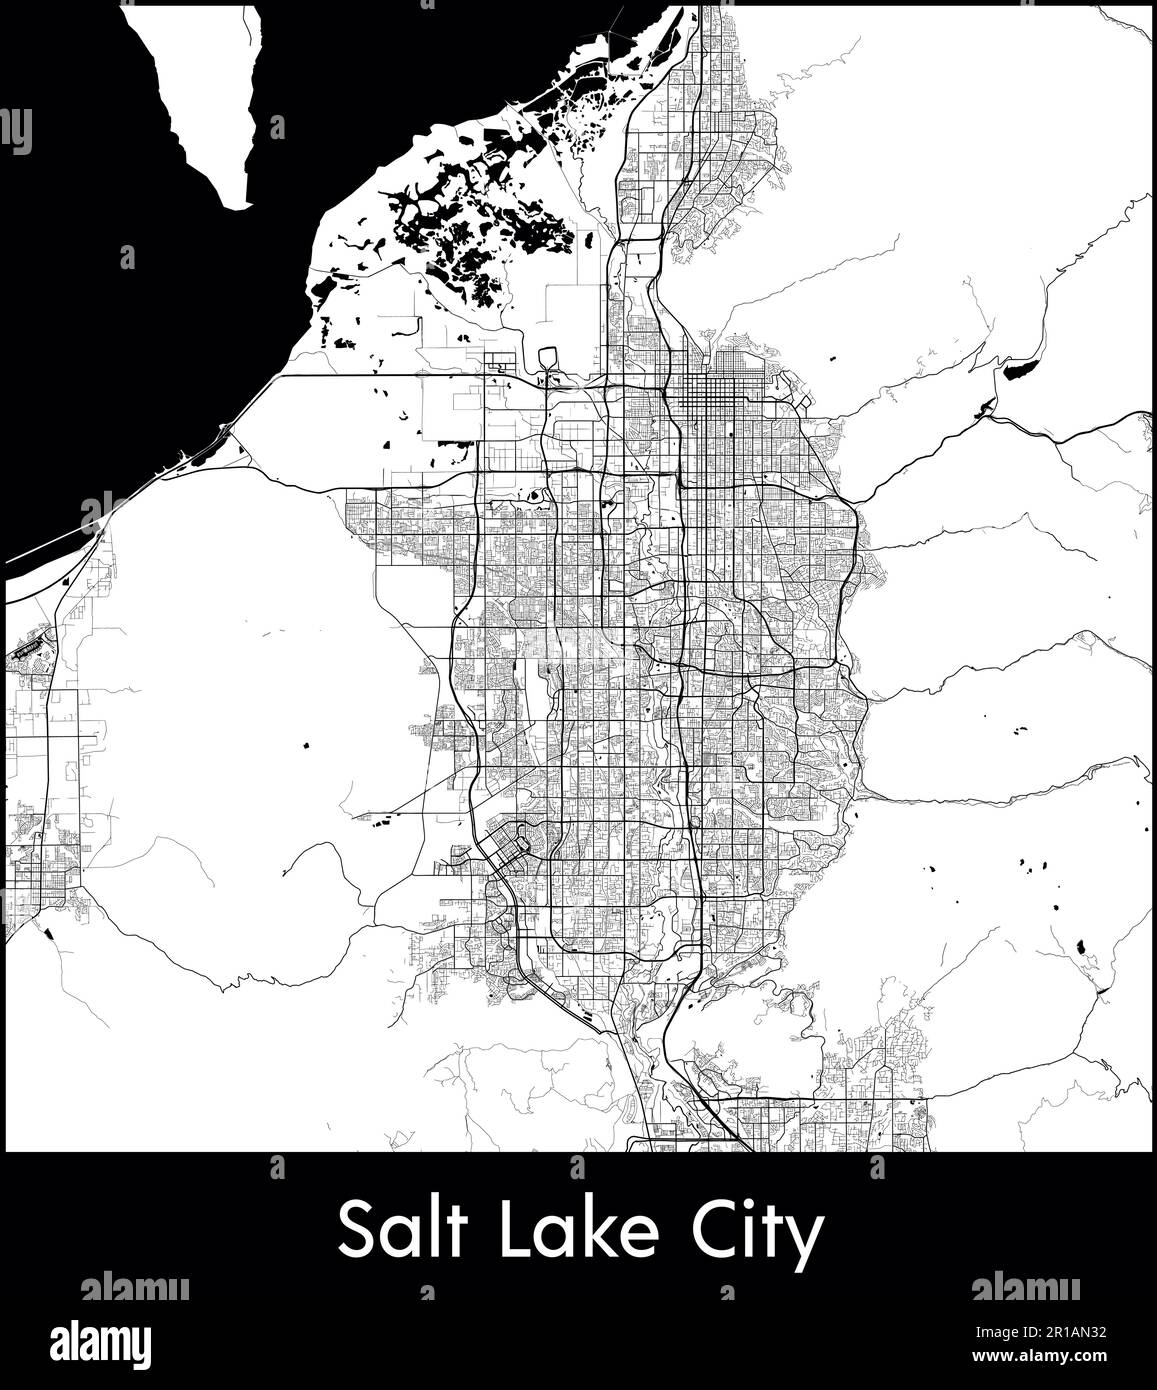 City Map North America United States Salt Lake City vector illustration Stock Vector